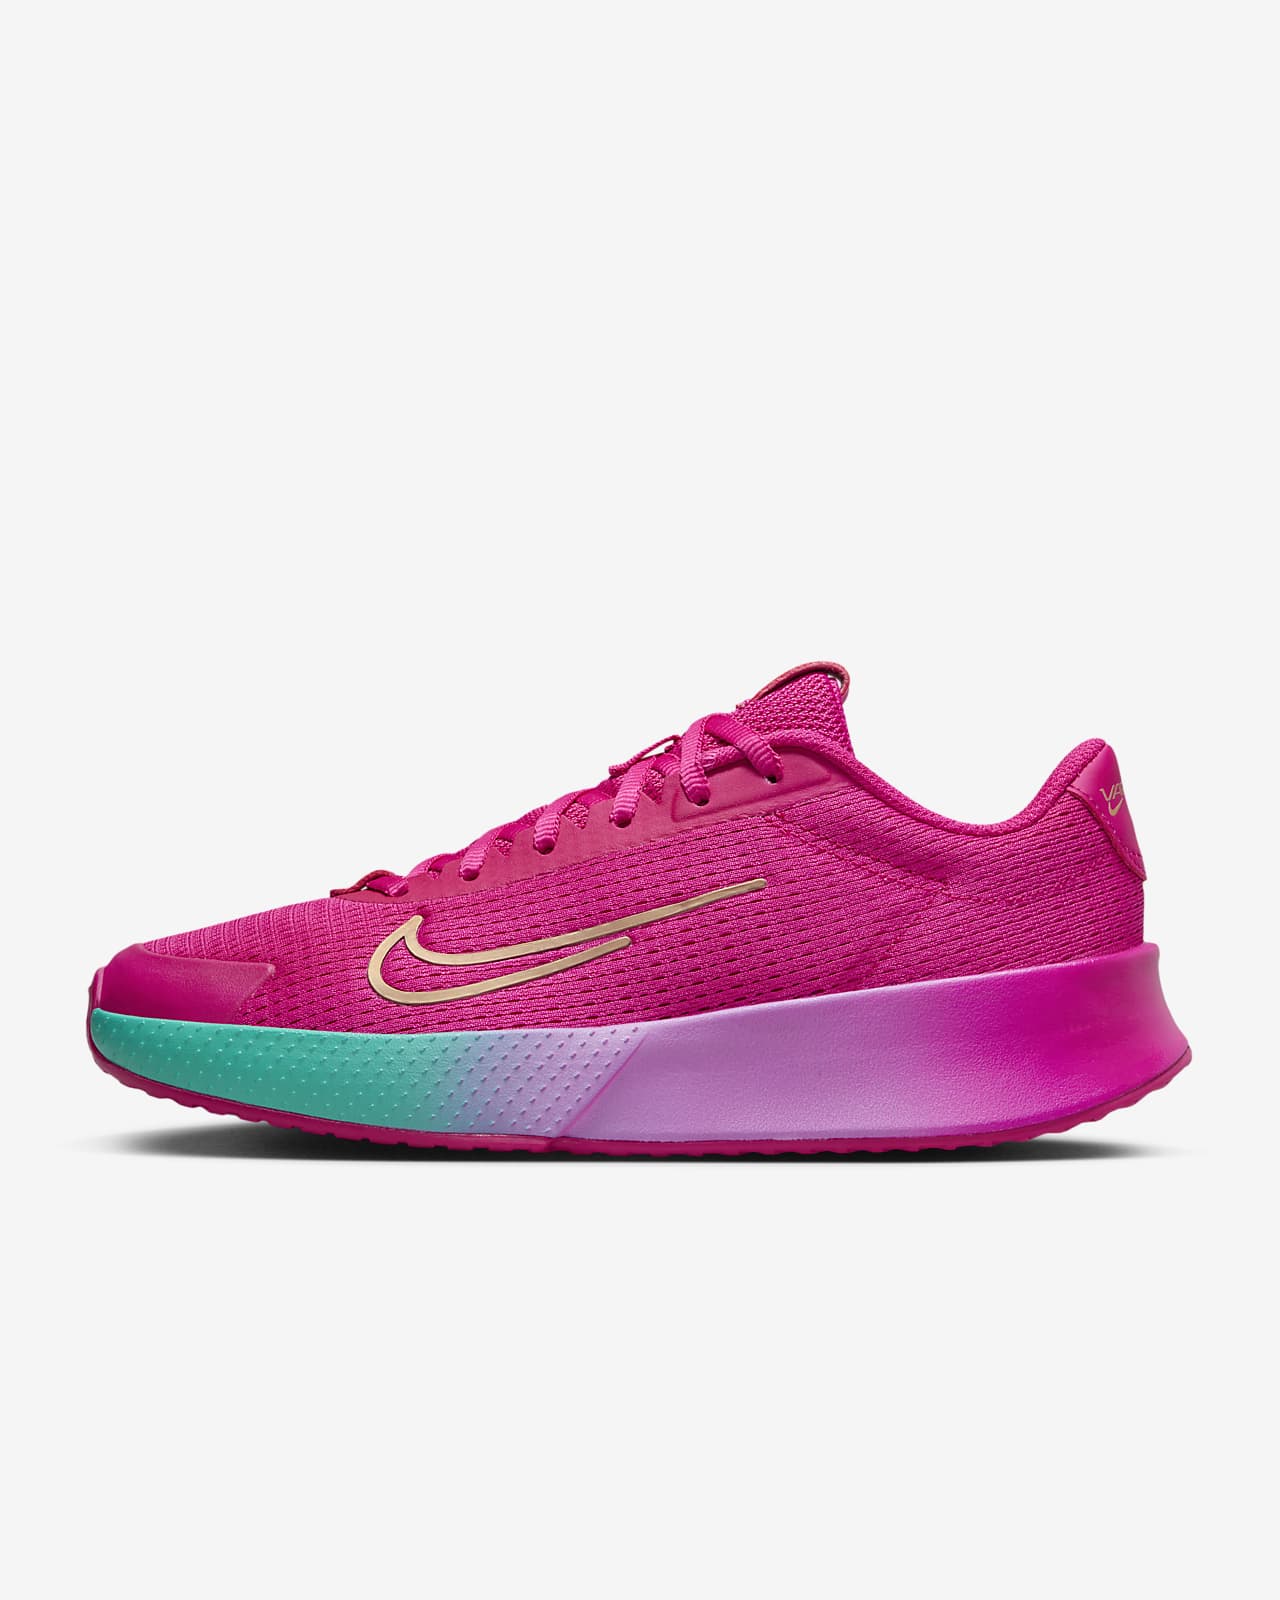 Calzado de tenis para cancha dura para mujer NikeCourt Vapor Lite 2 Premium